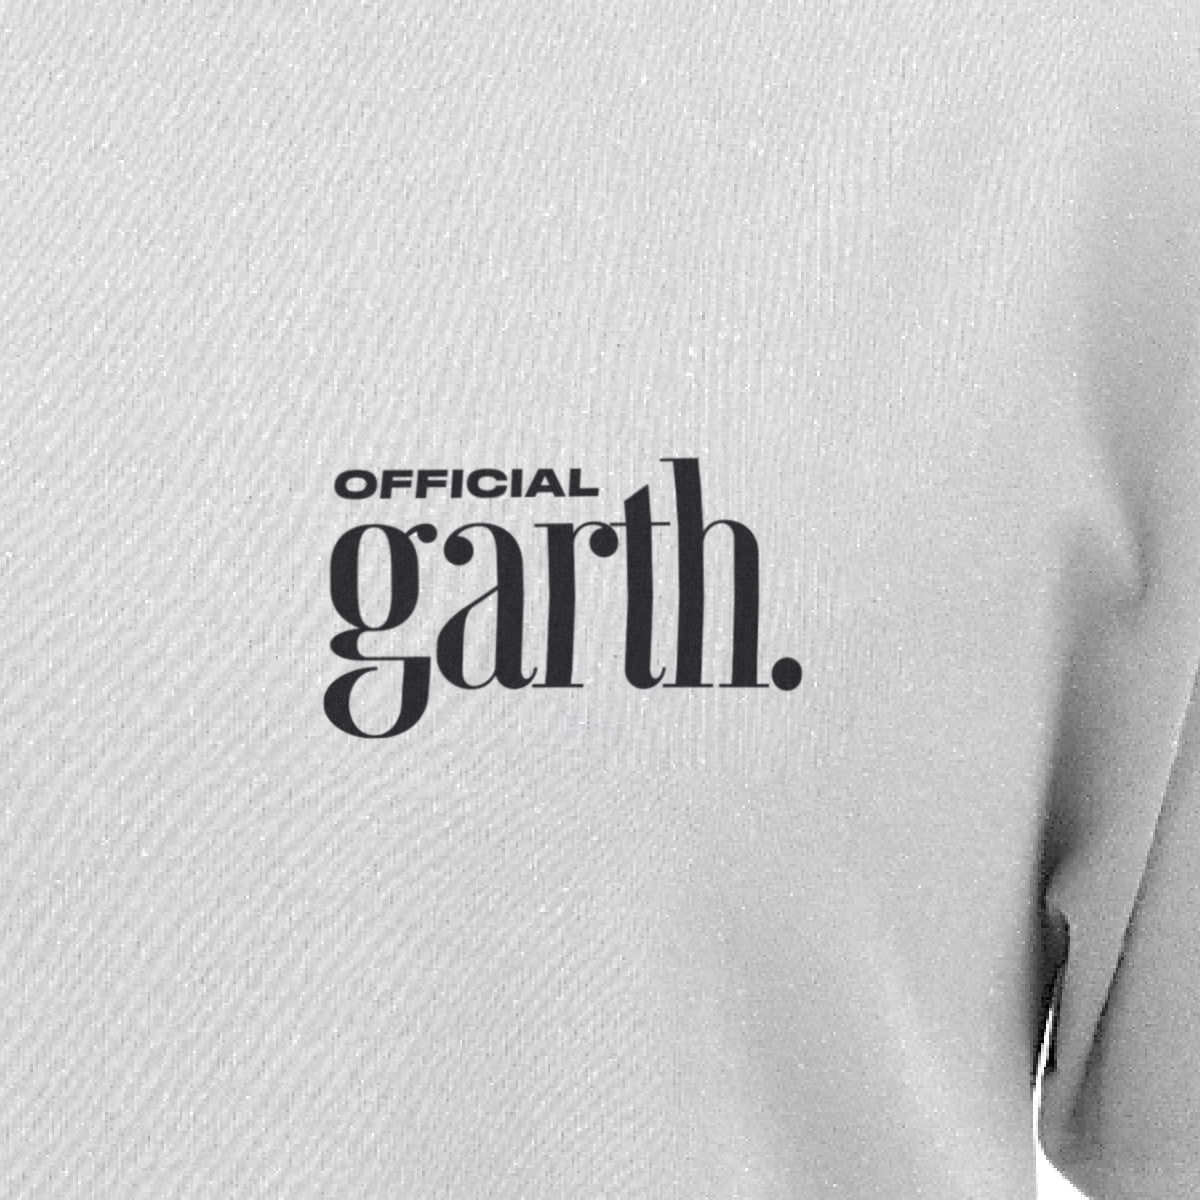 Garth. Official Tee